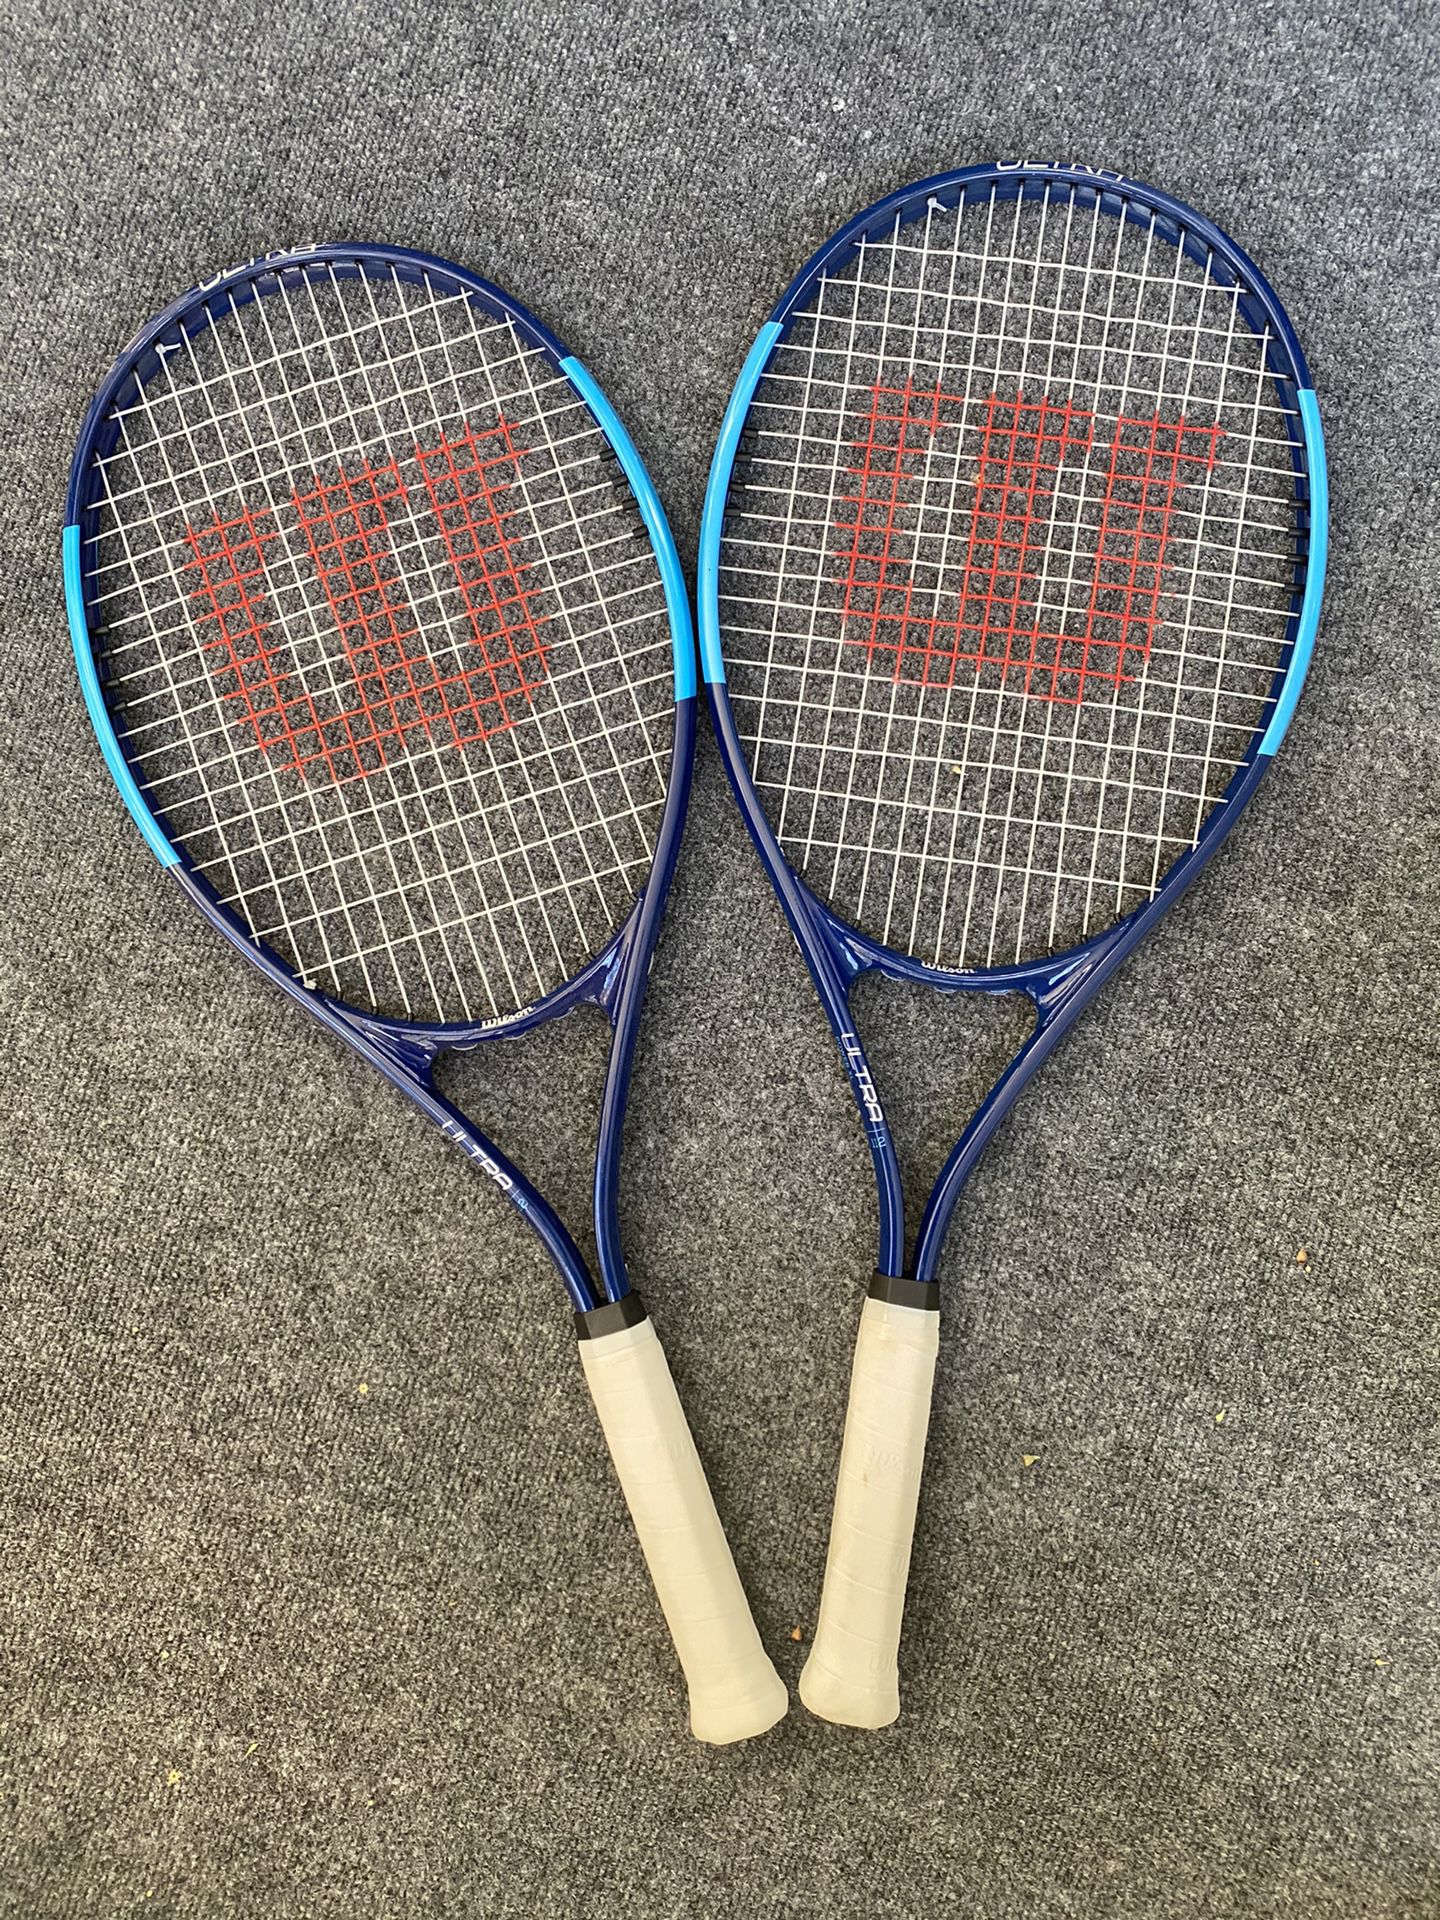 Adults 2 Tennis Rackets with 40 Tennis Balls, Wilson Ultra Power XL 112 (like new)